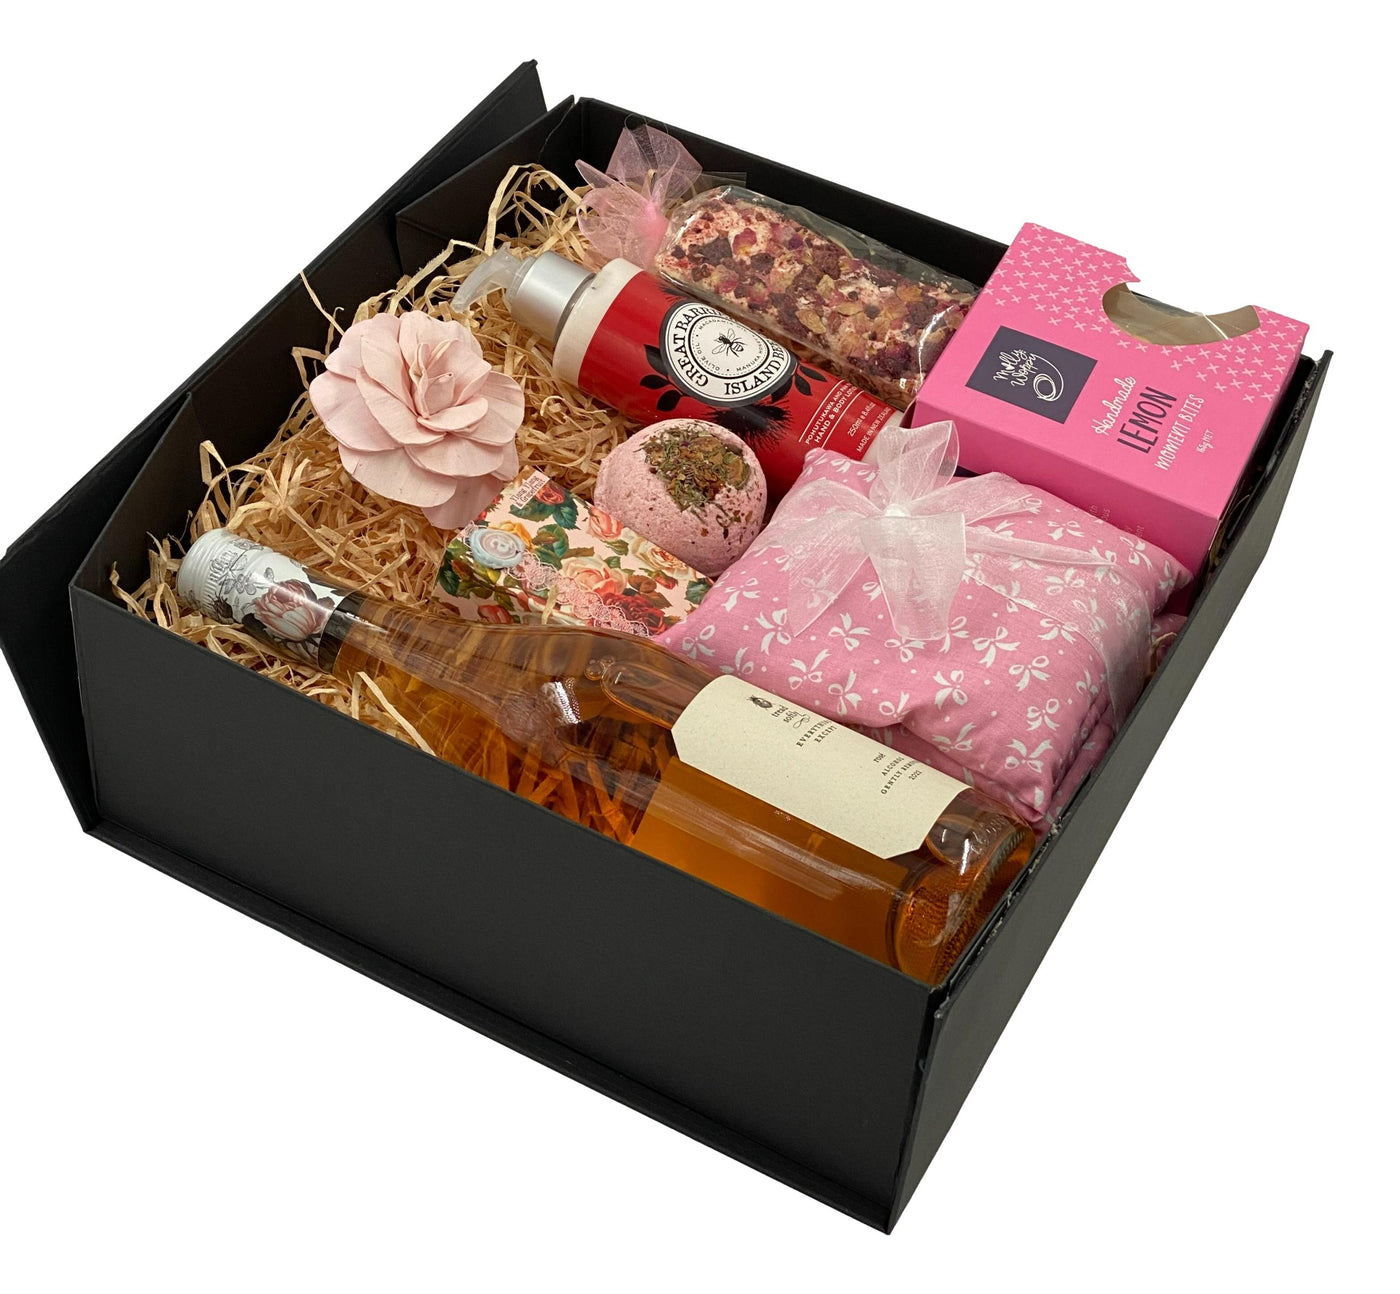 The Treat Gift Box